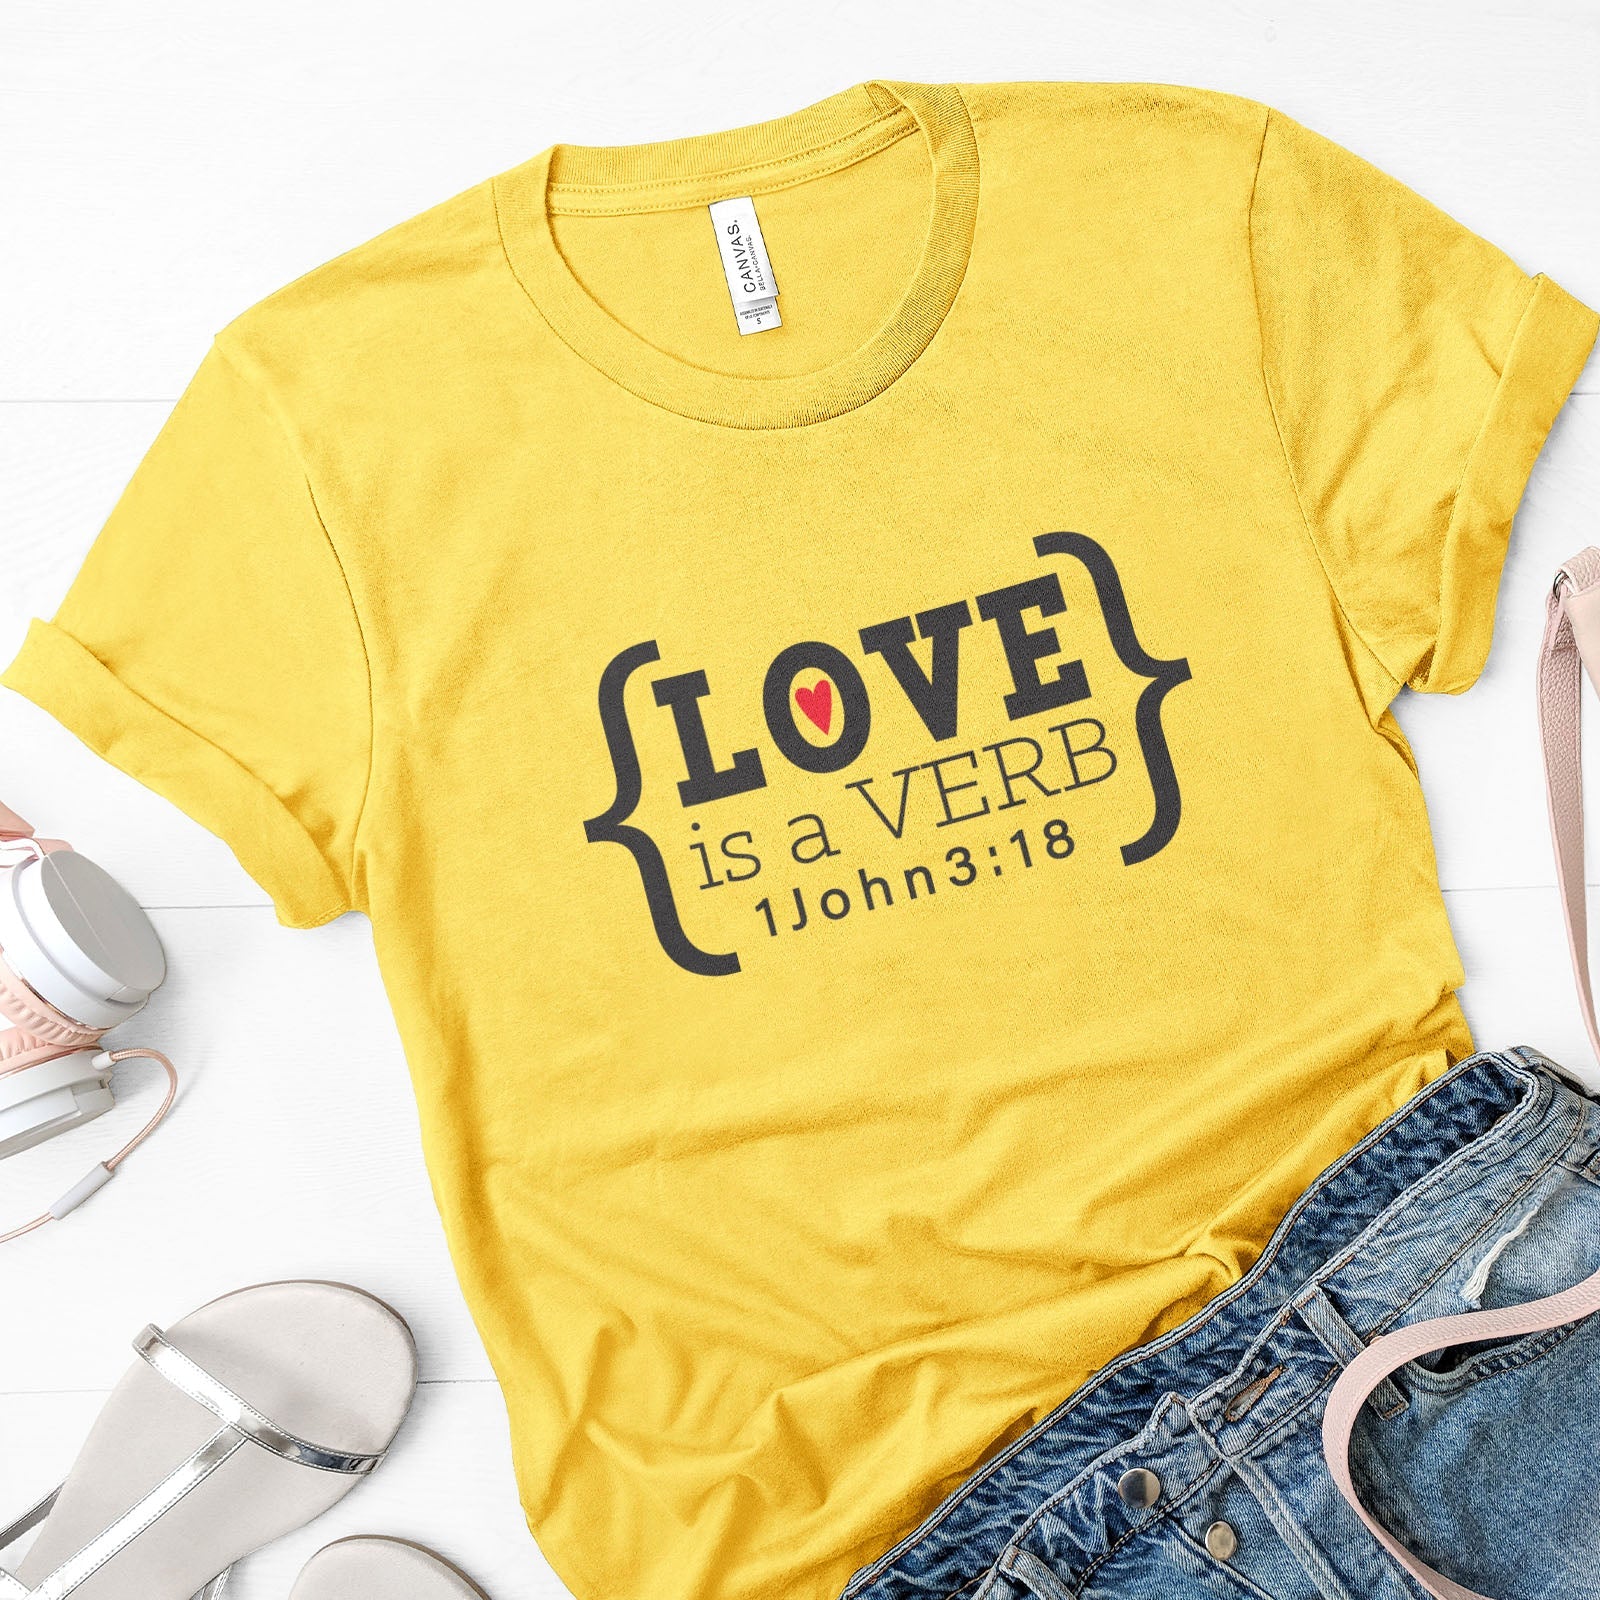 Love is a Verb John 3:18 Tee Shirts For Women - Christian Shirts for Women - Religious Tee Shirts